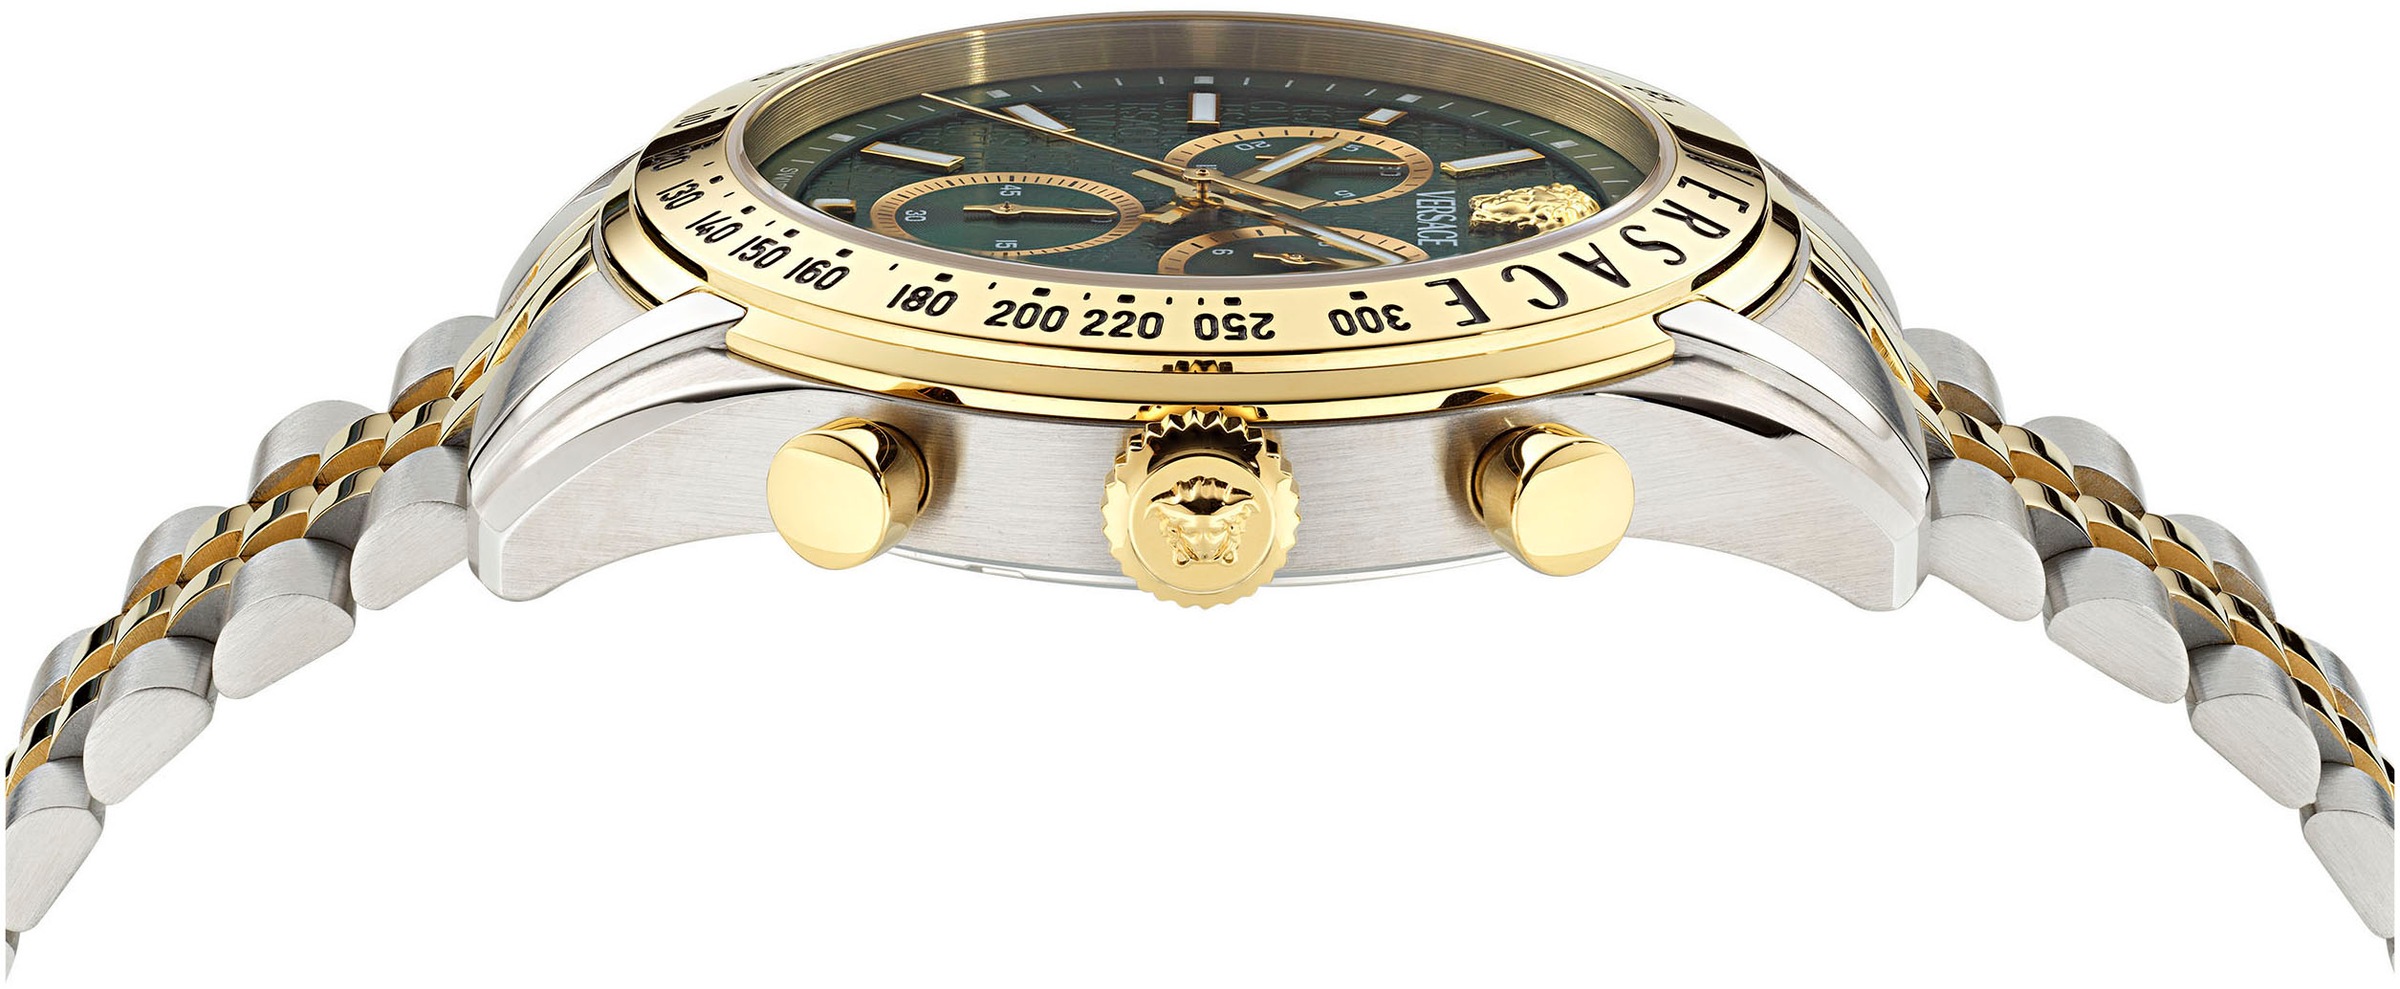 Versace Chronograph »CHRONO MASTER«, Quarzuhr, Armbanduhr, Herrenuhr, Datum, Stoppfunktion, Swiss Made